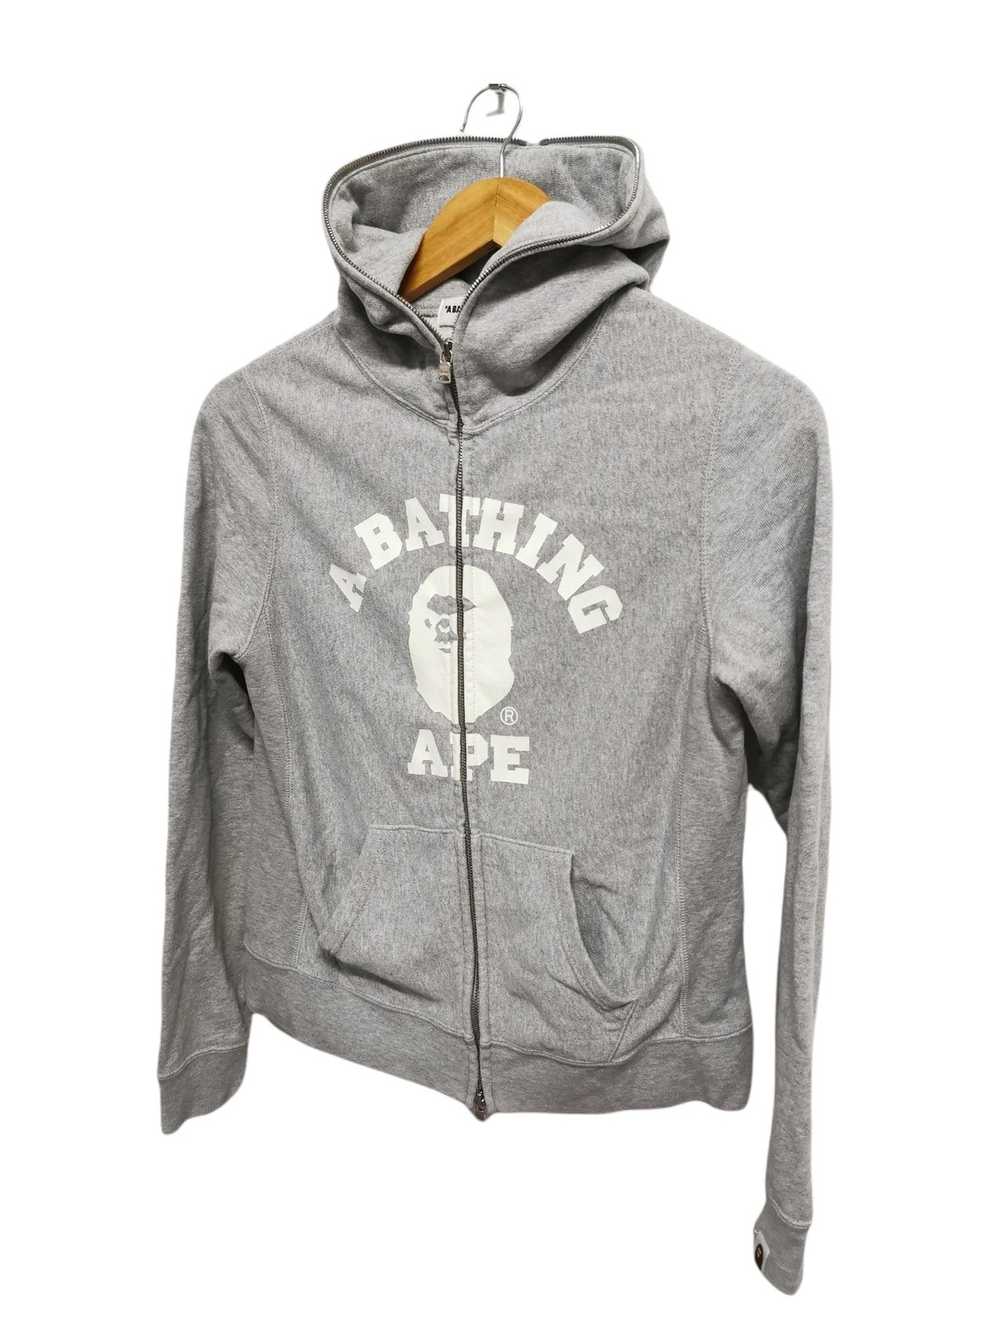 Bape BAPE College logo full zip hoodie - image 2